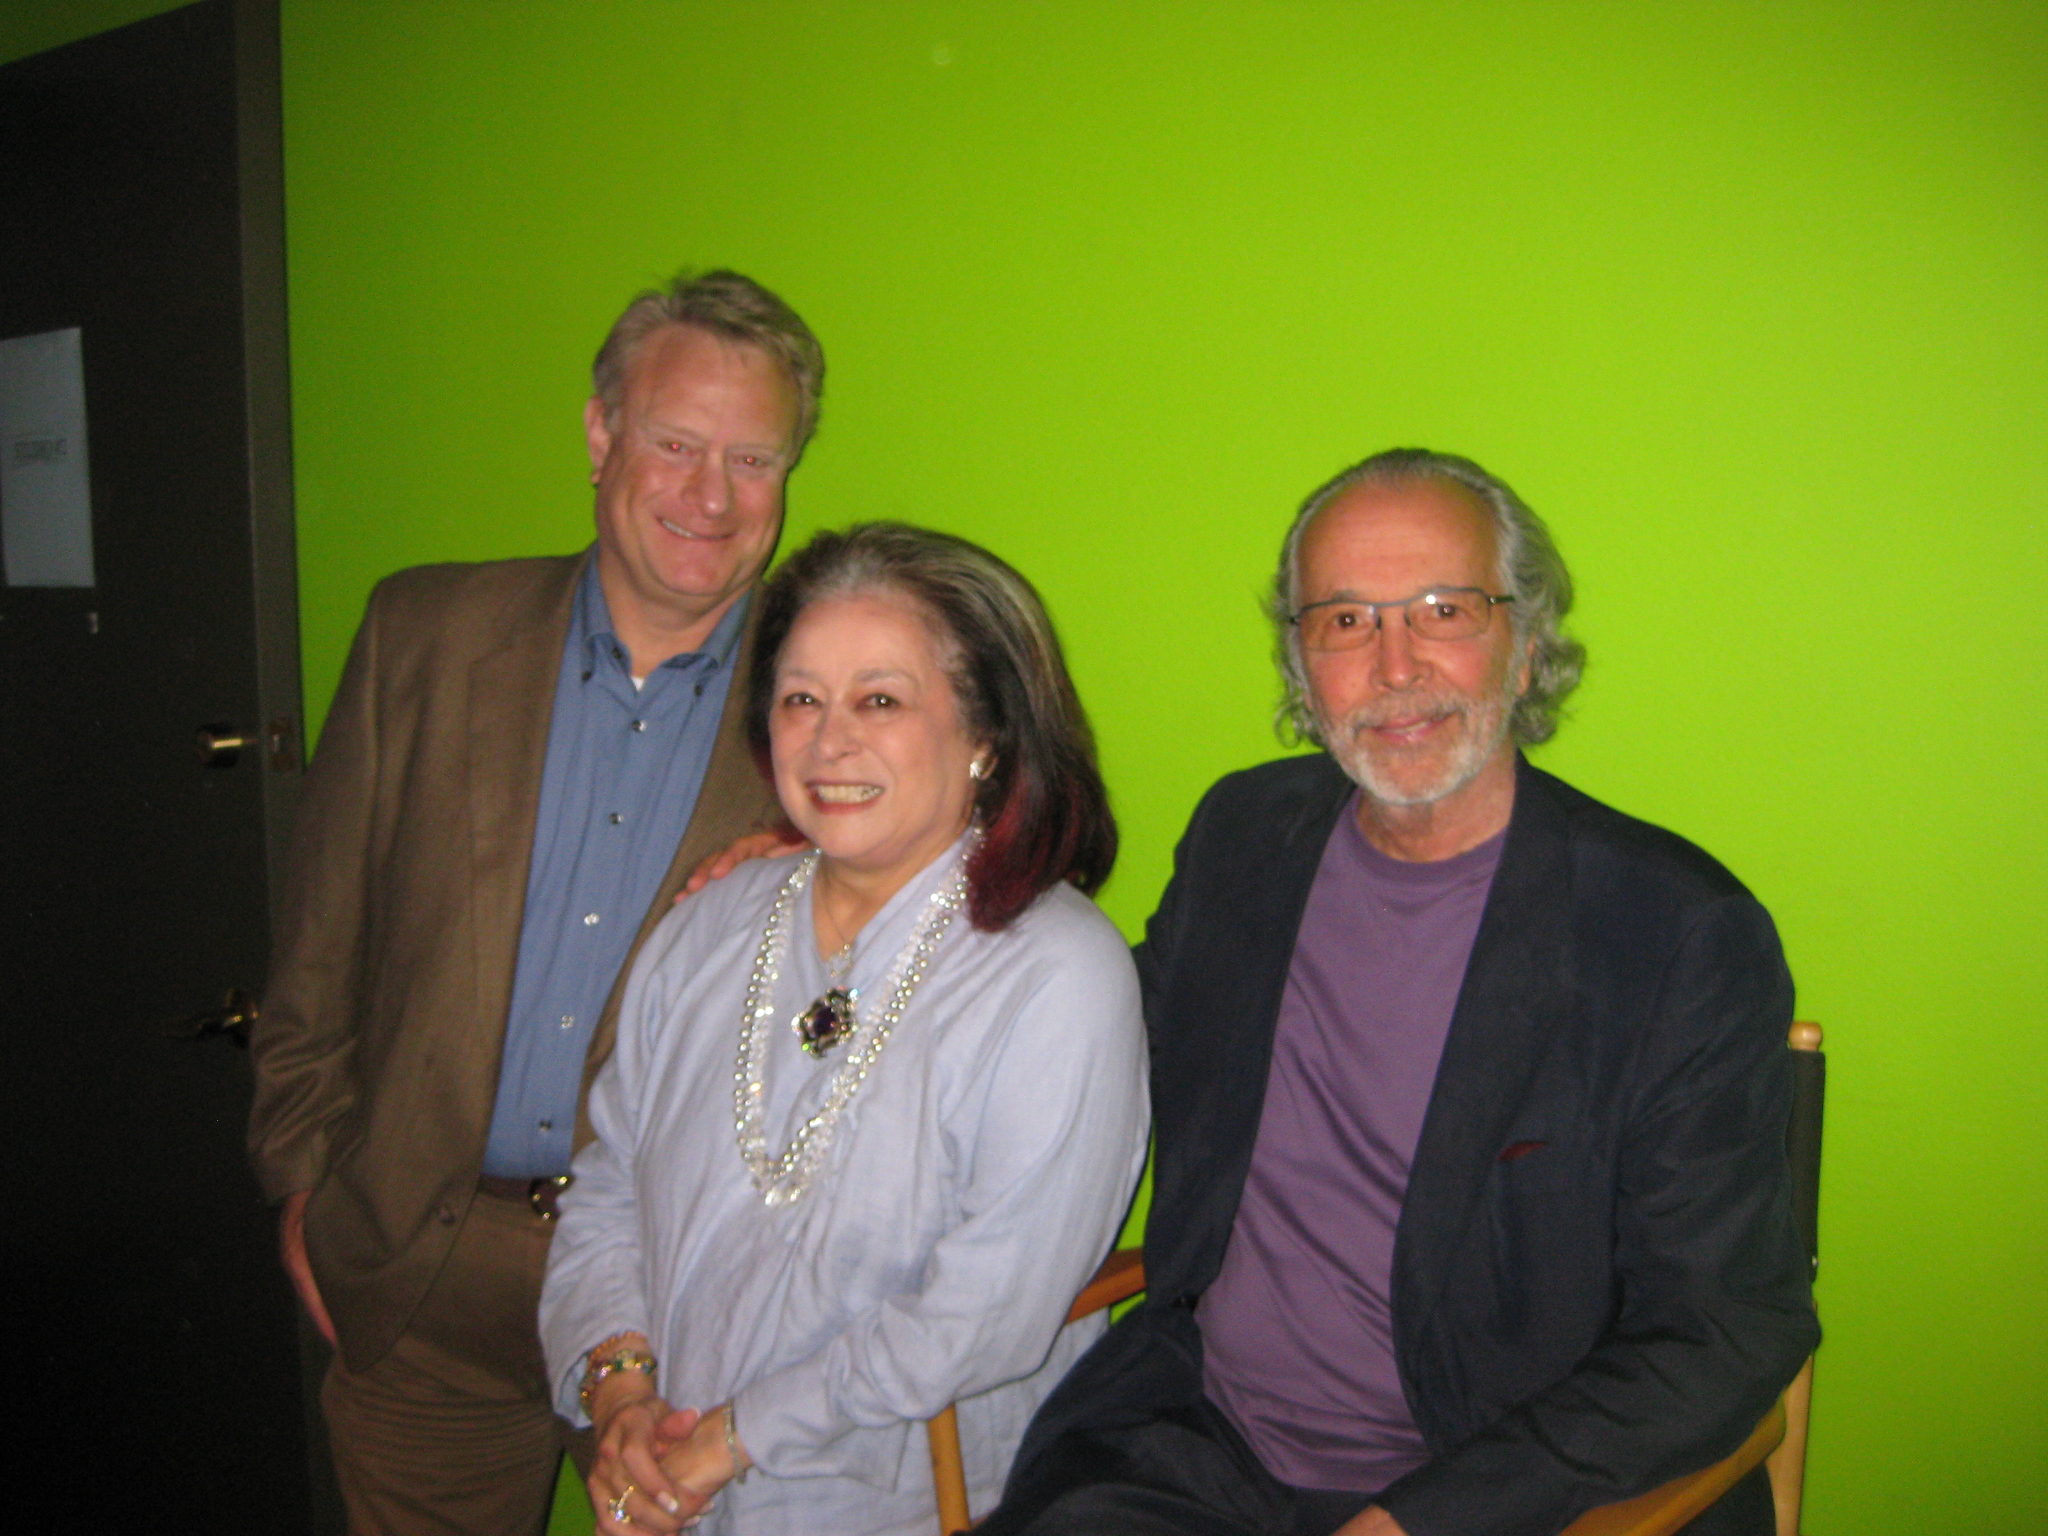 Kevin Brief & Herb Alpert being interviewed by Joan Quinn.